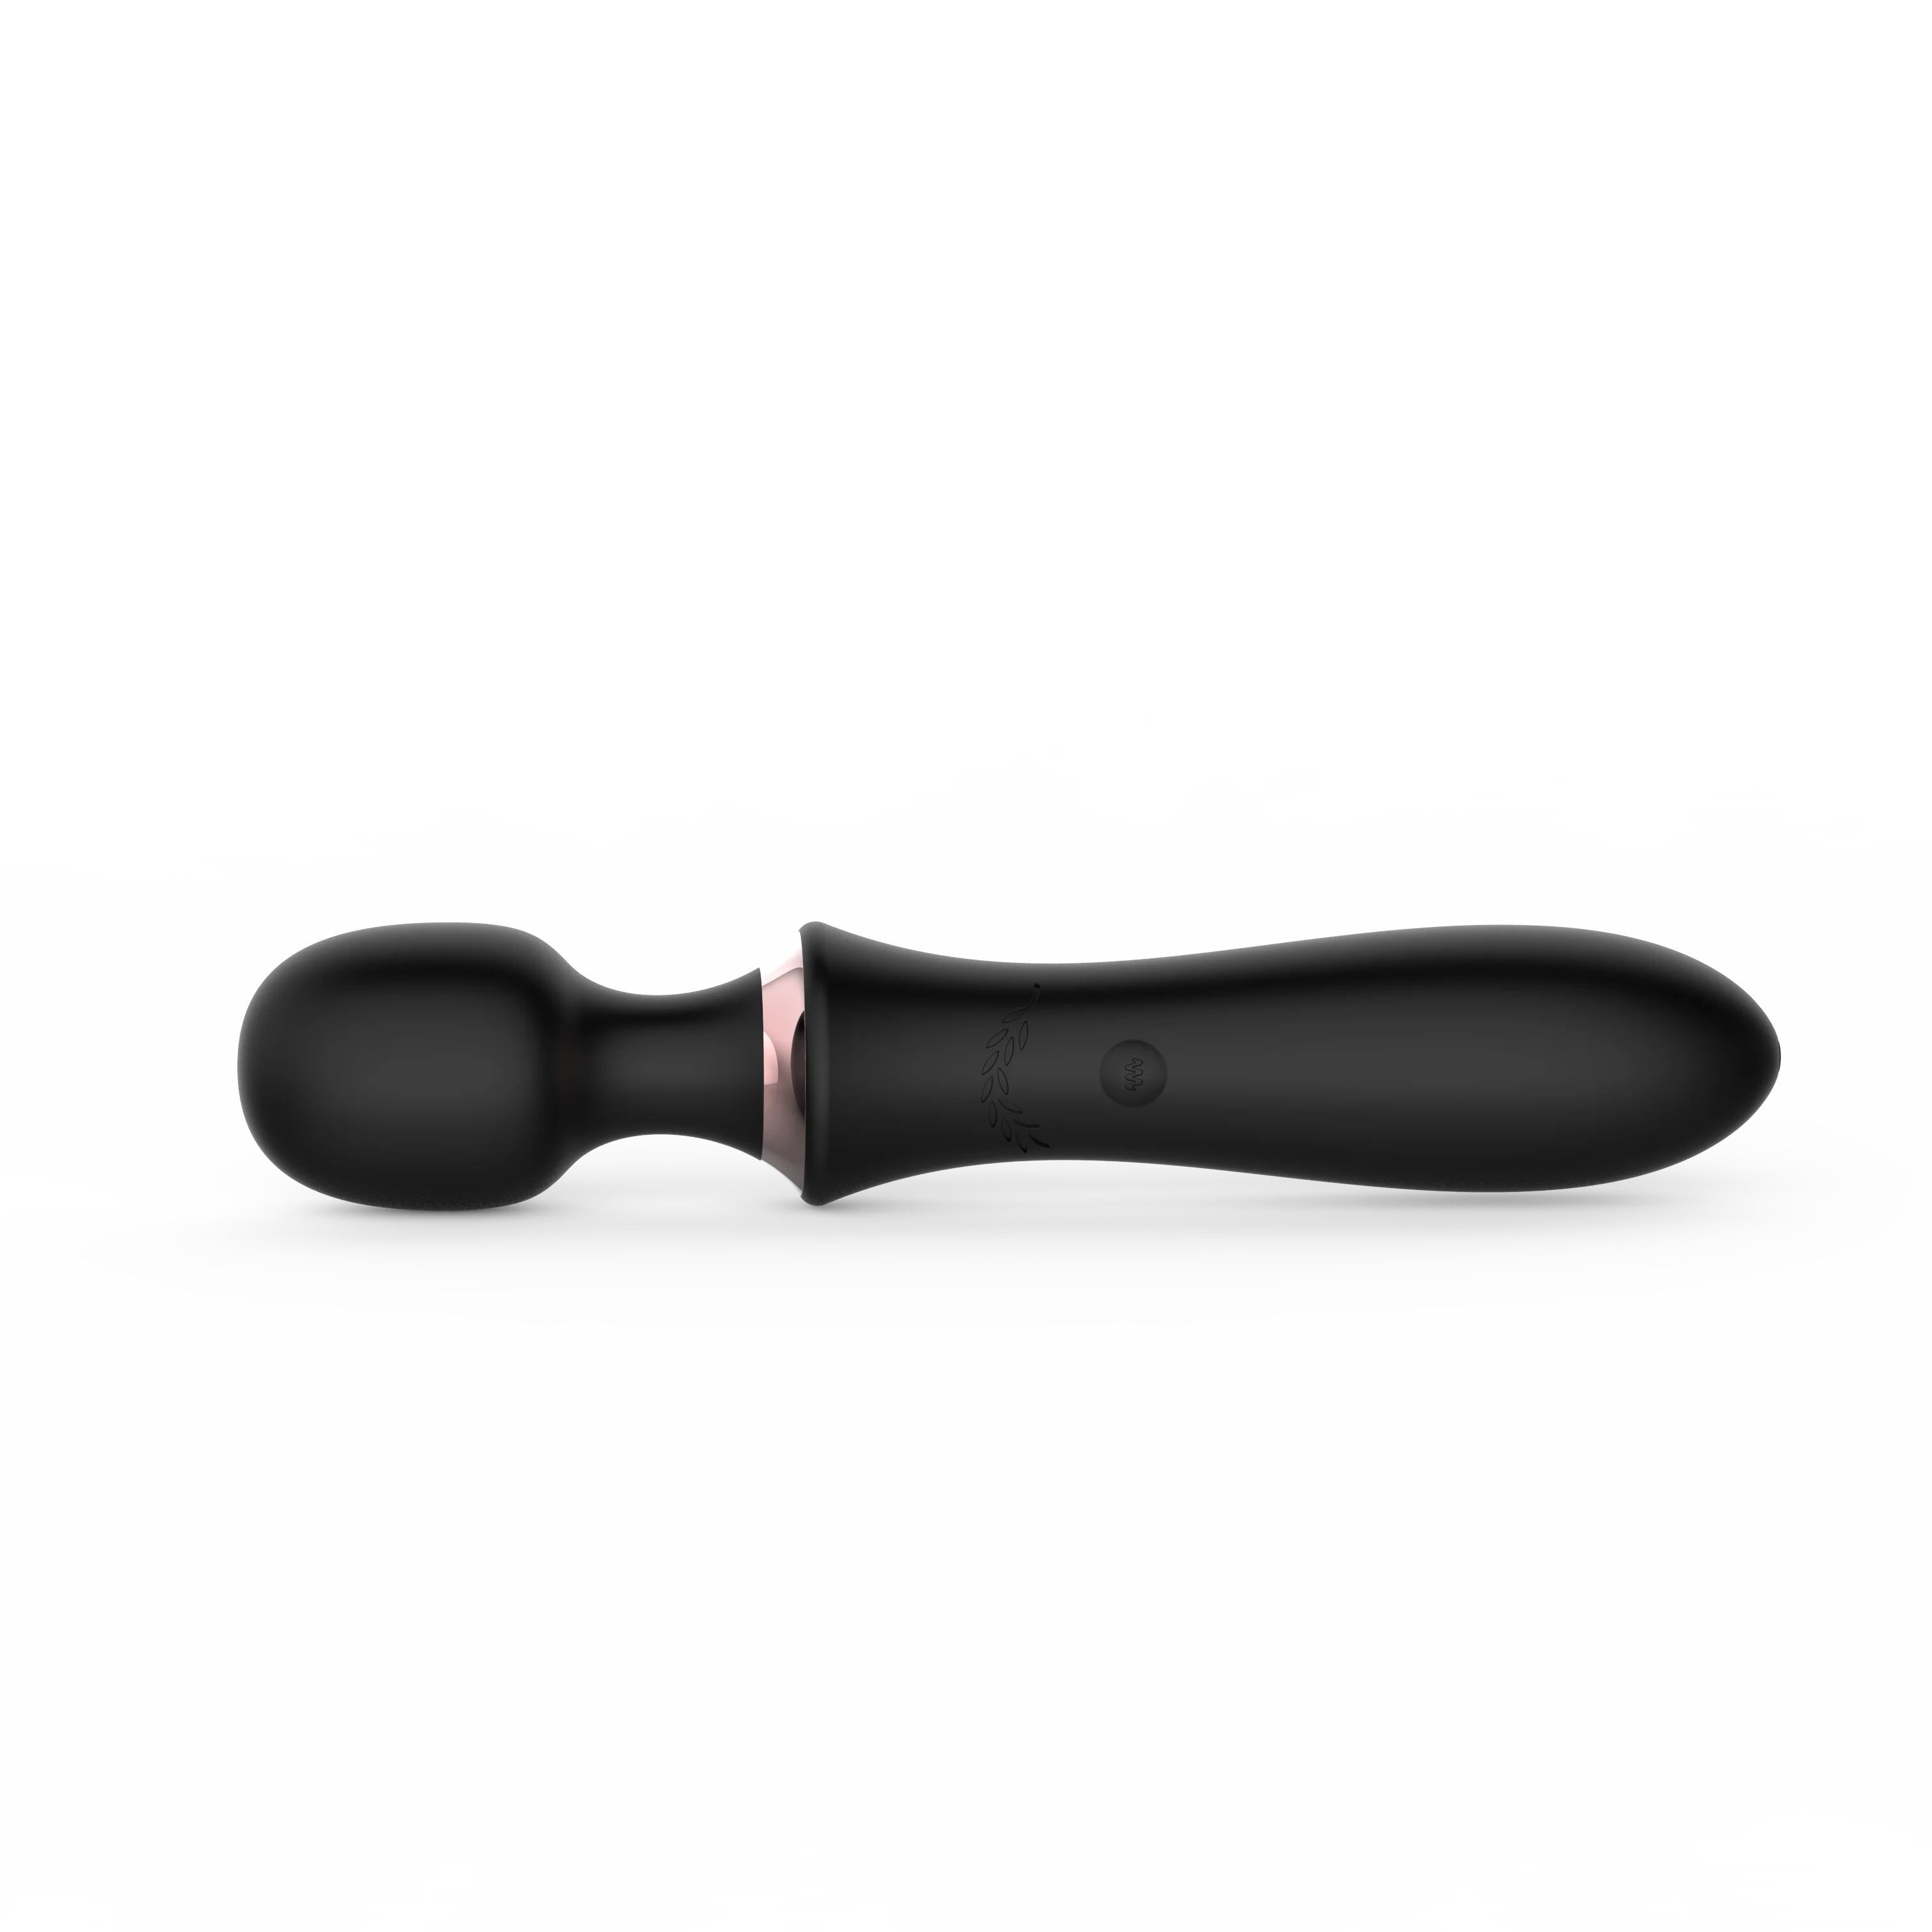 Hot Sale Sex Toy Vibrator Adult Product Toys Sex Vibrating Magic Av Wand Massager Vibrator For